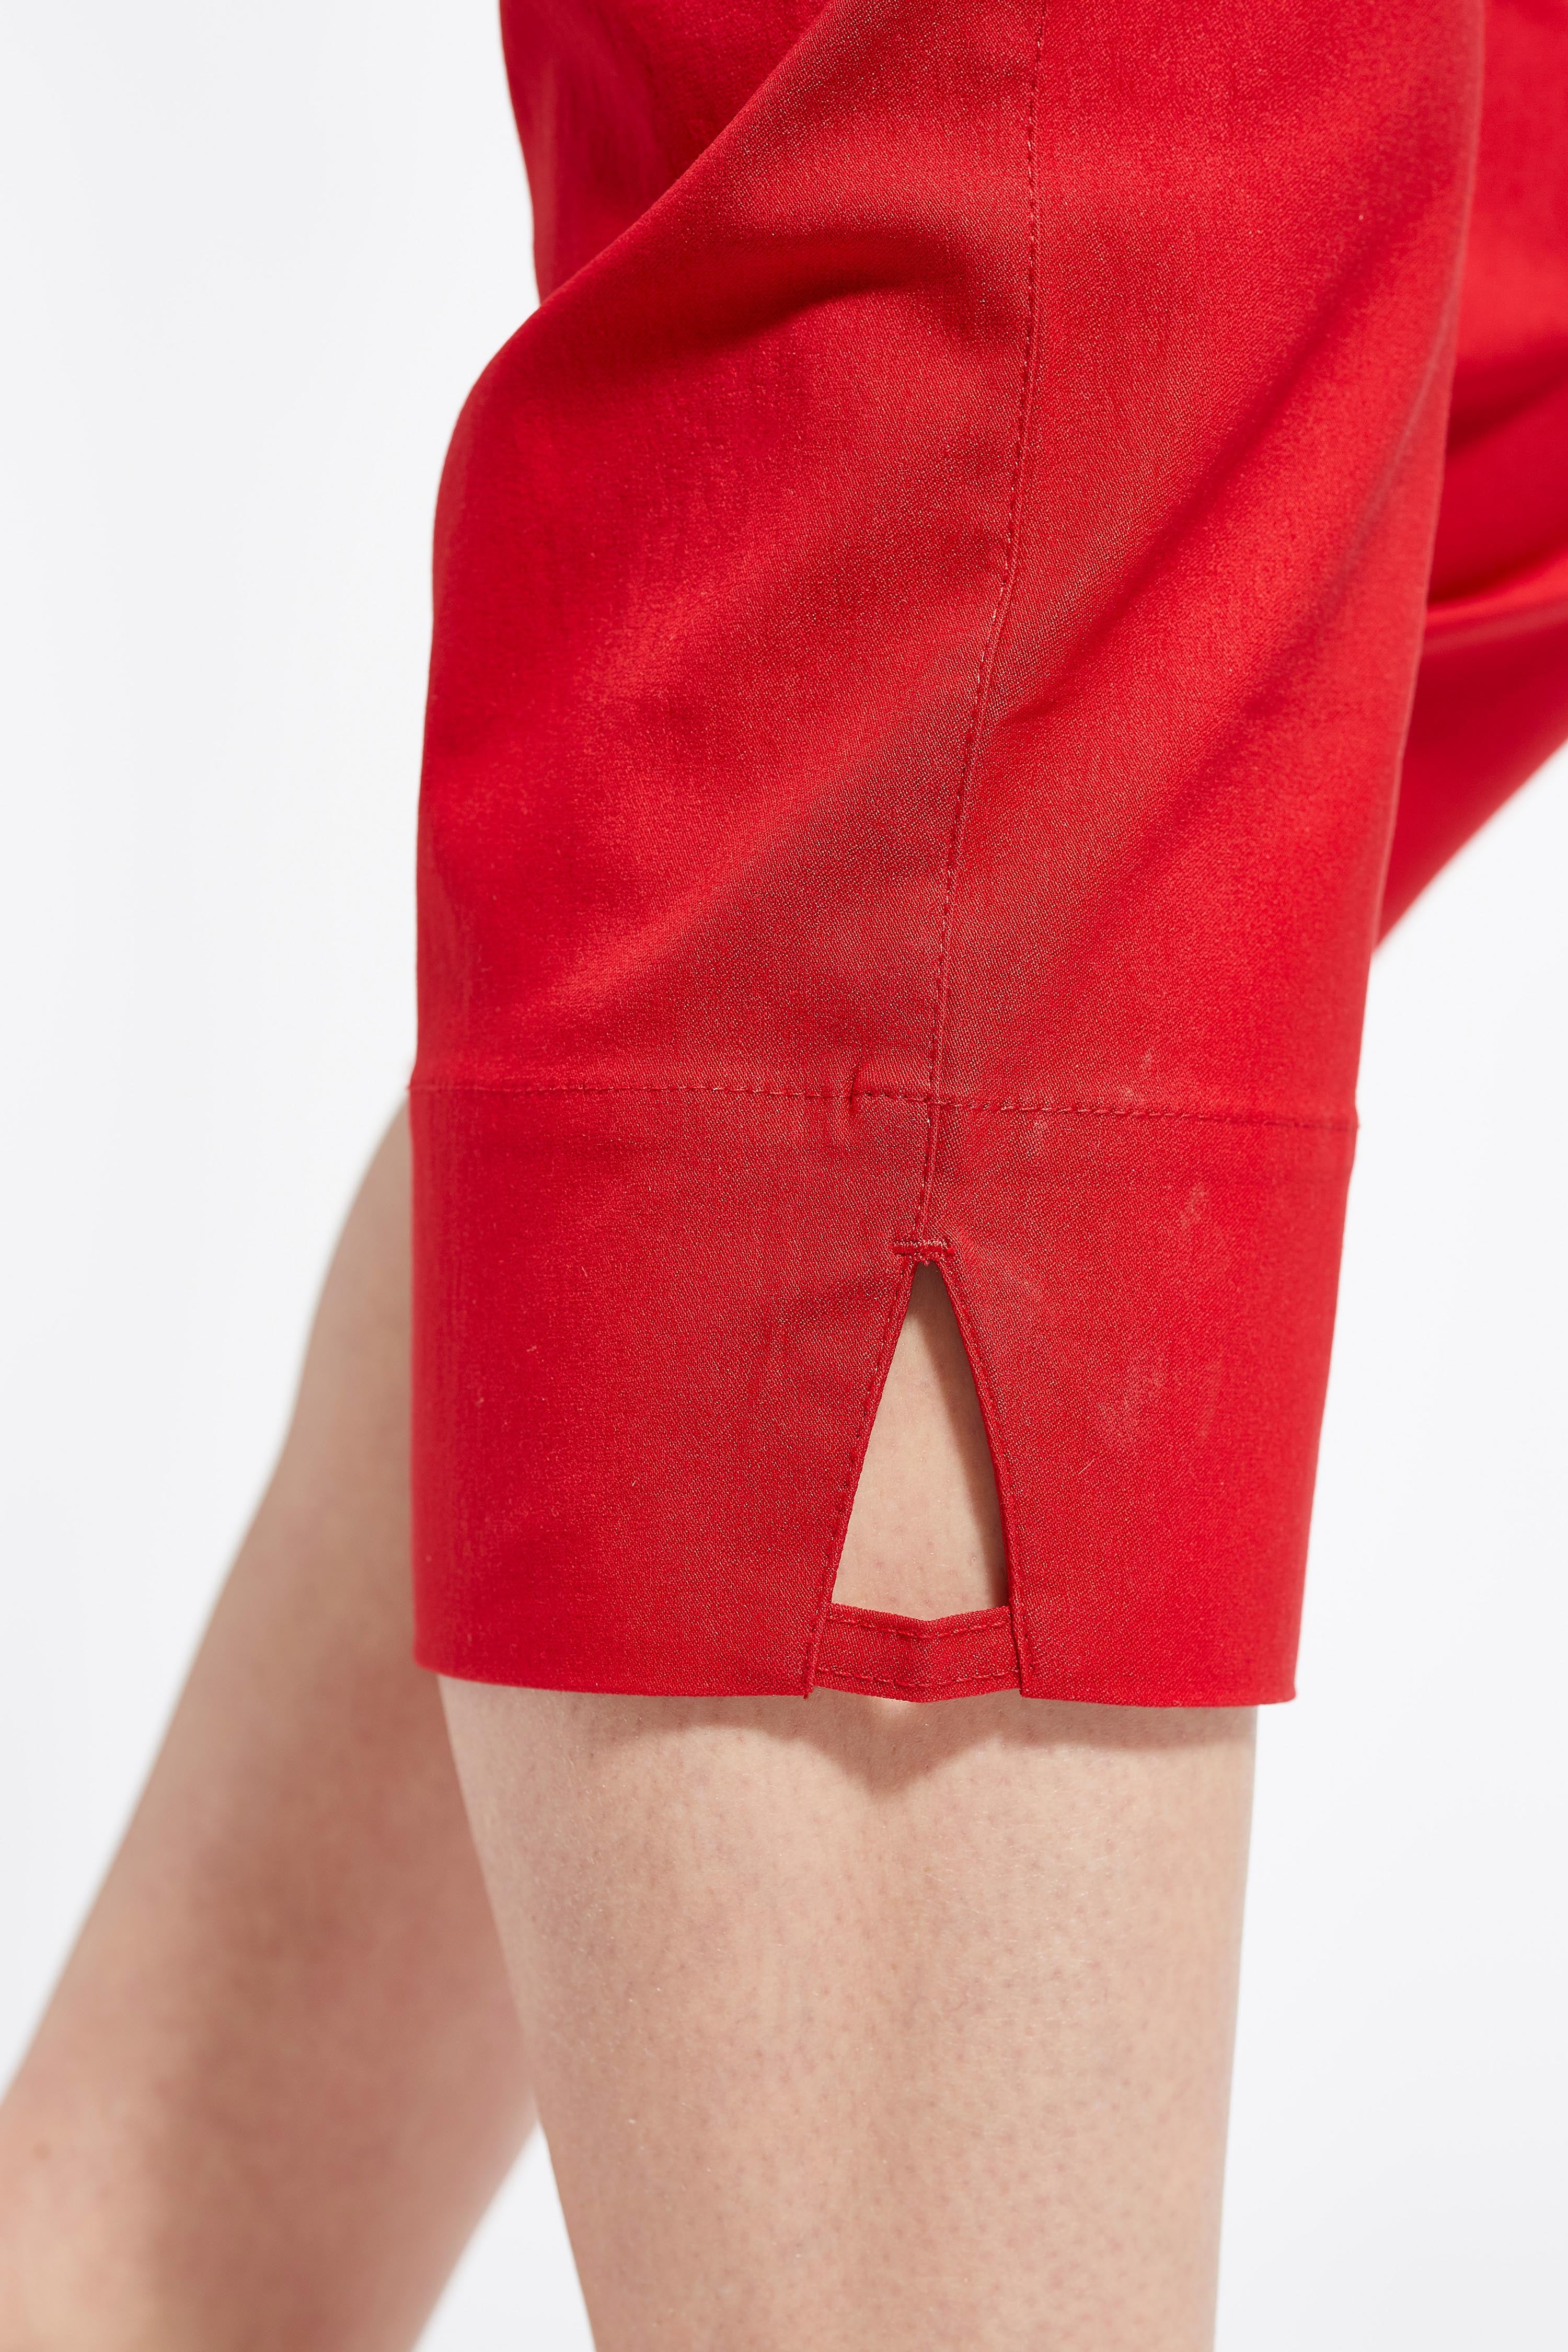 LAURIE  Anabelle Regular Capri Medium Length Trousers REGULAR 60970 Red